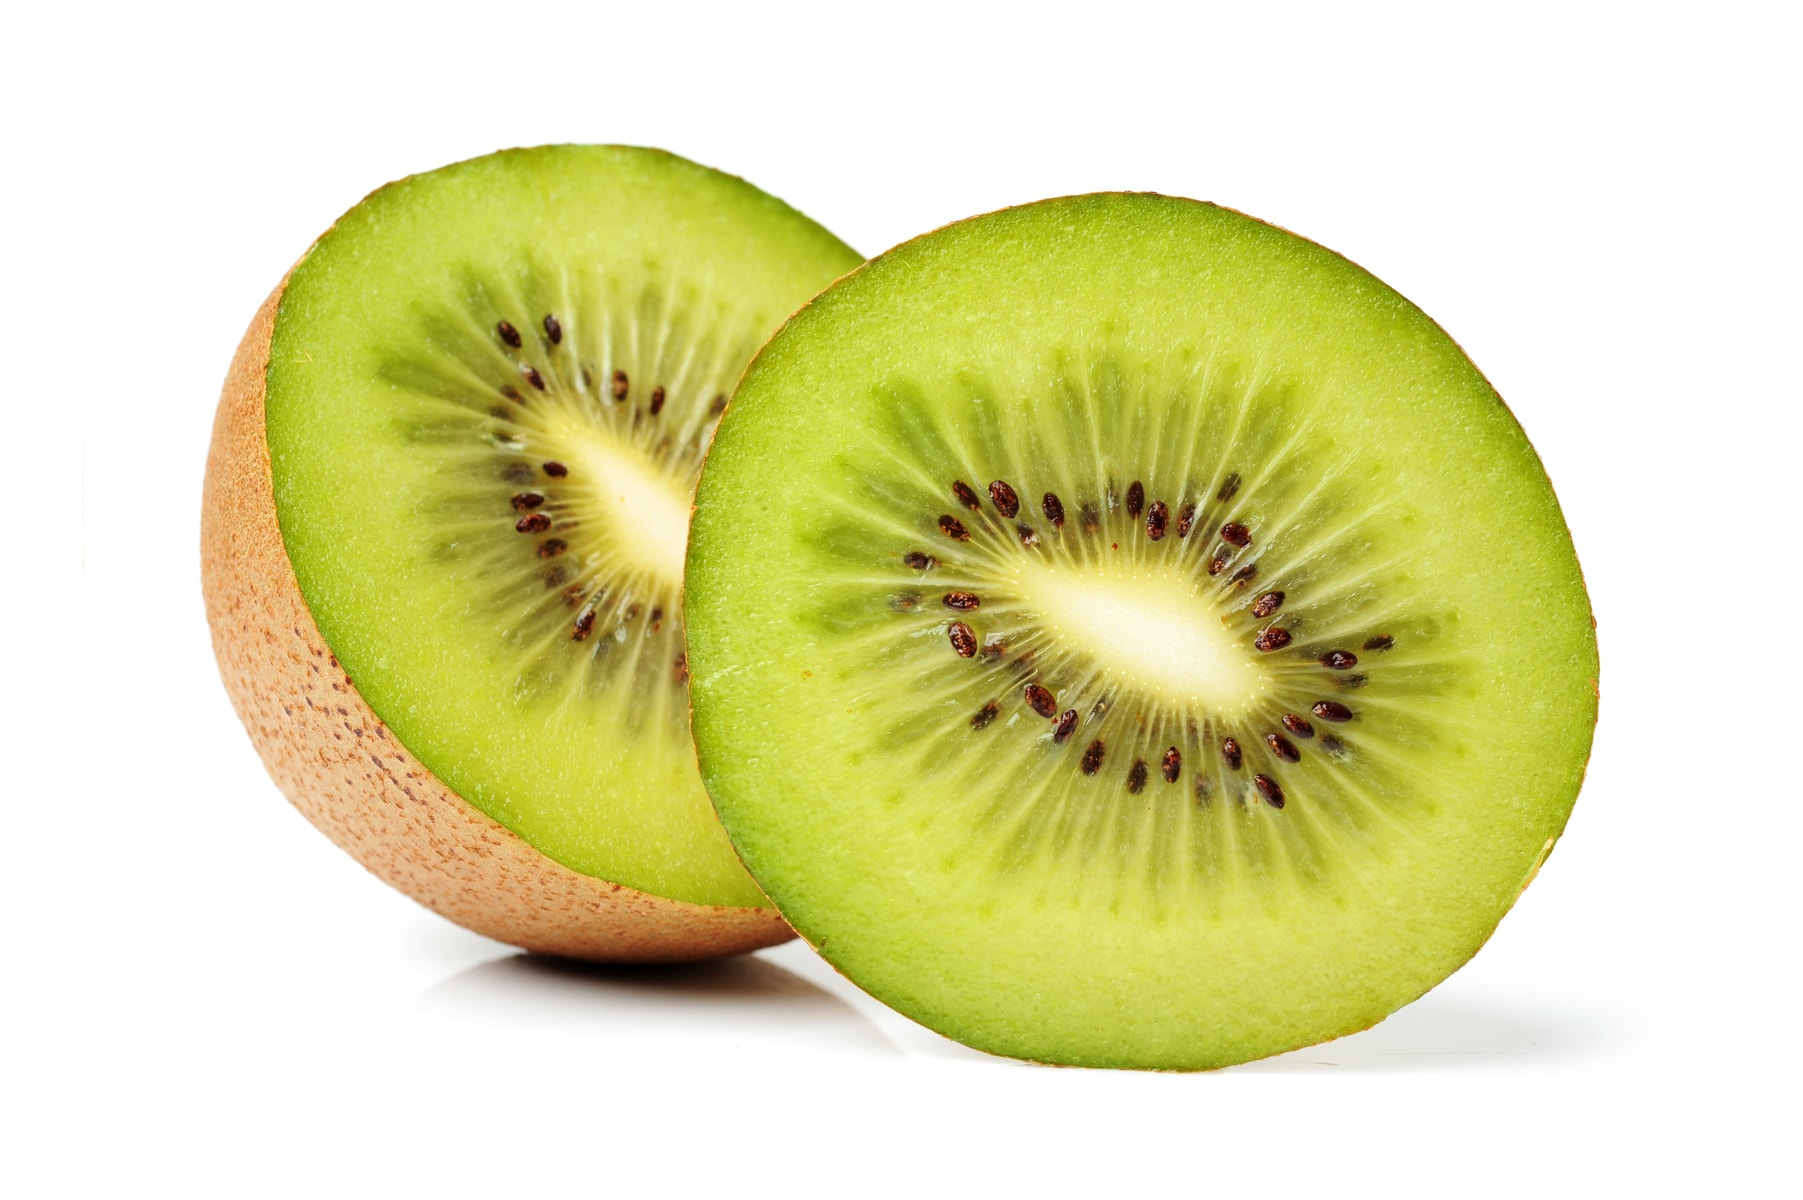 https://media.healthyfood.com/wp-content/uploads/2017/03/Ask-the-experts-Kiwifruit.jpg